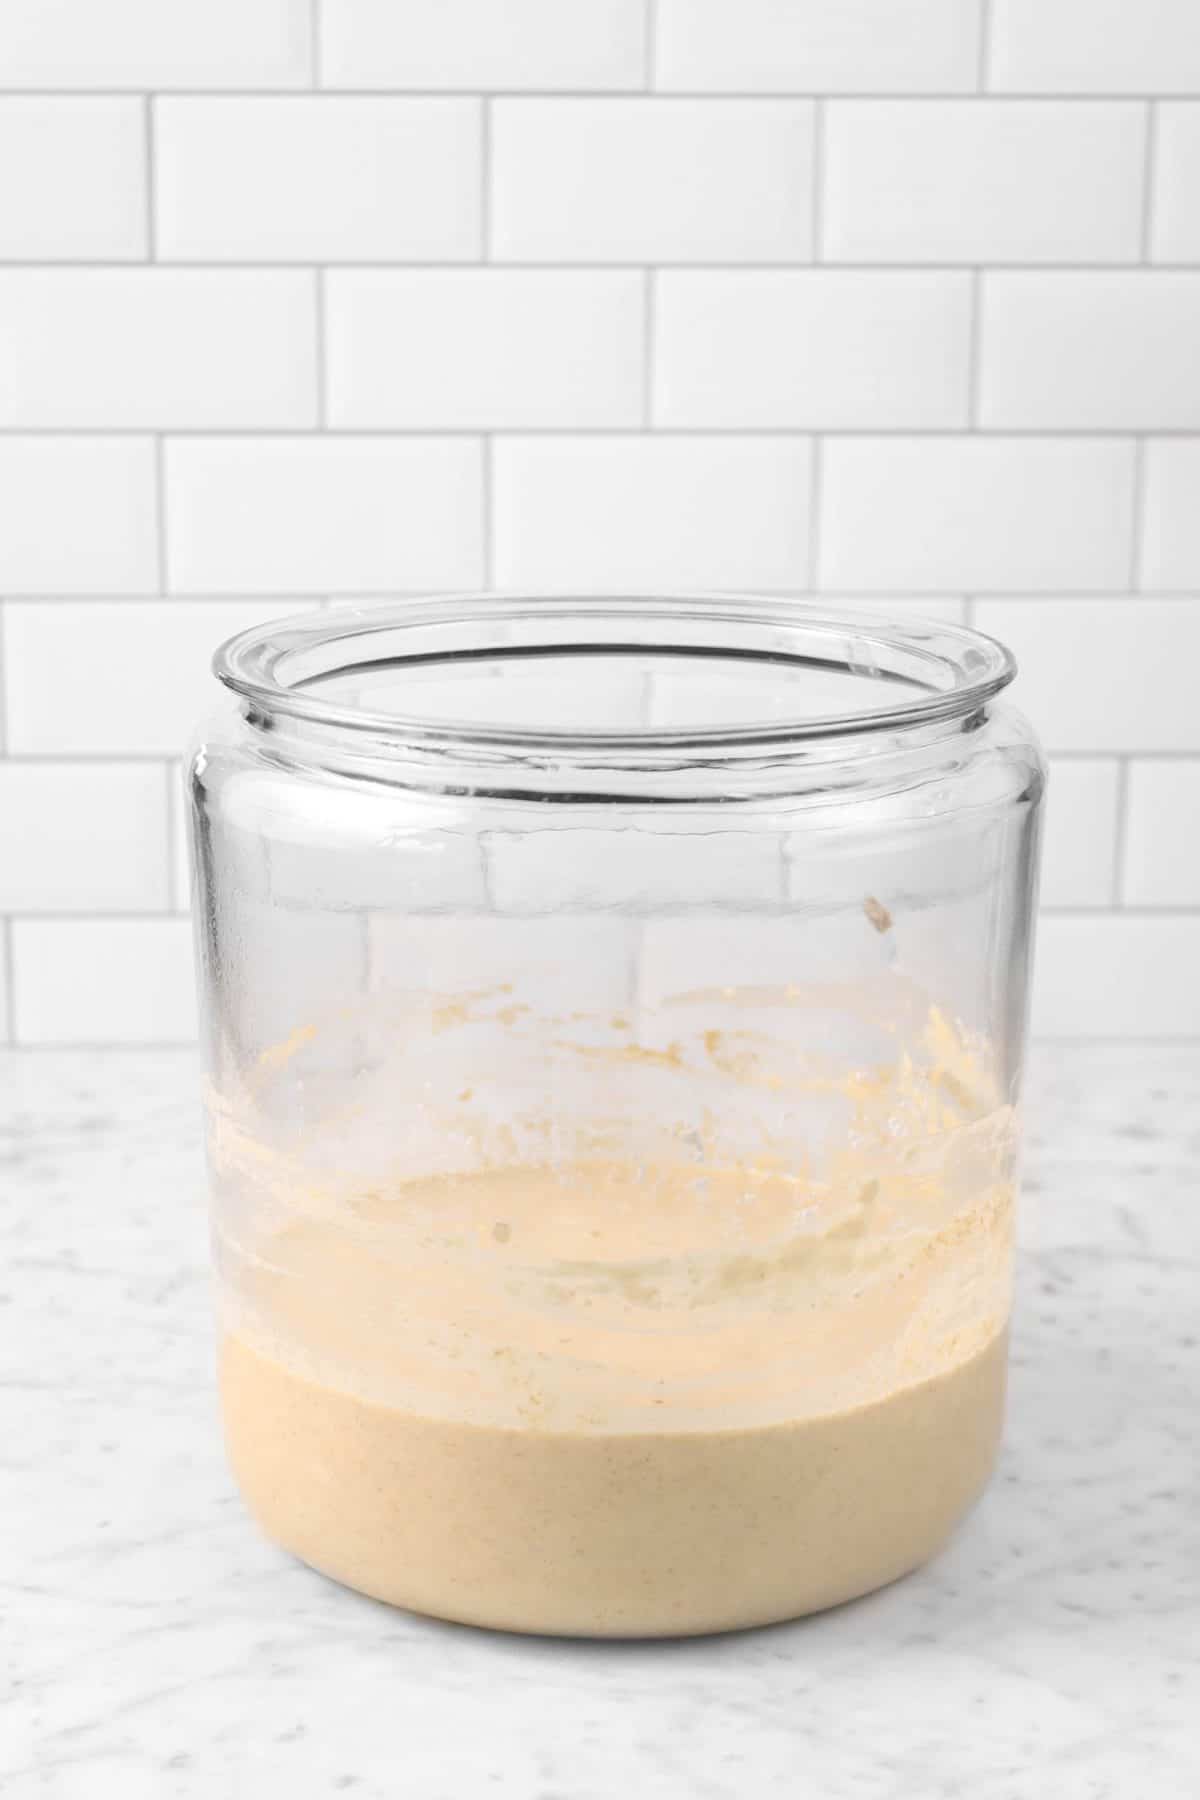 sourdough starter in a glass jar